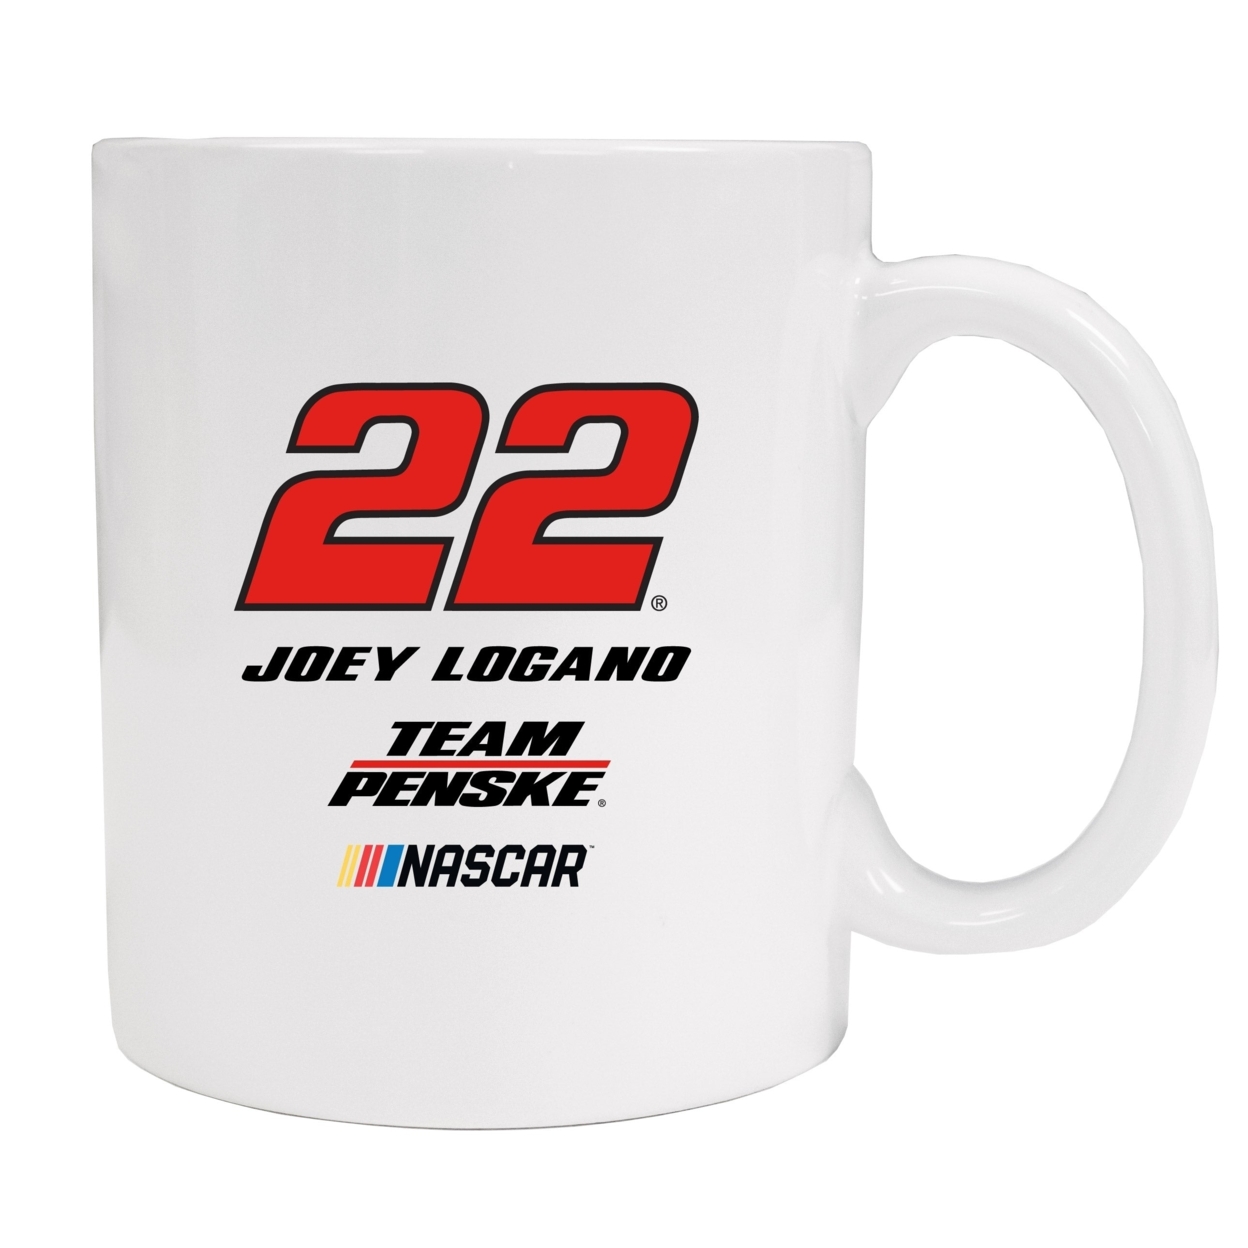 Joey Logano #22 Ceramic White Mug New For 2020 (White).